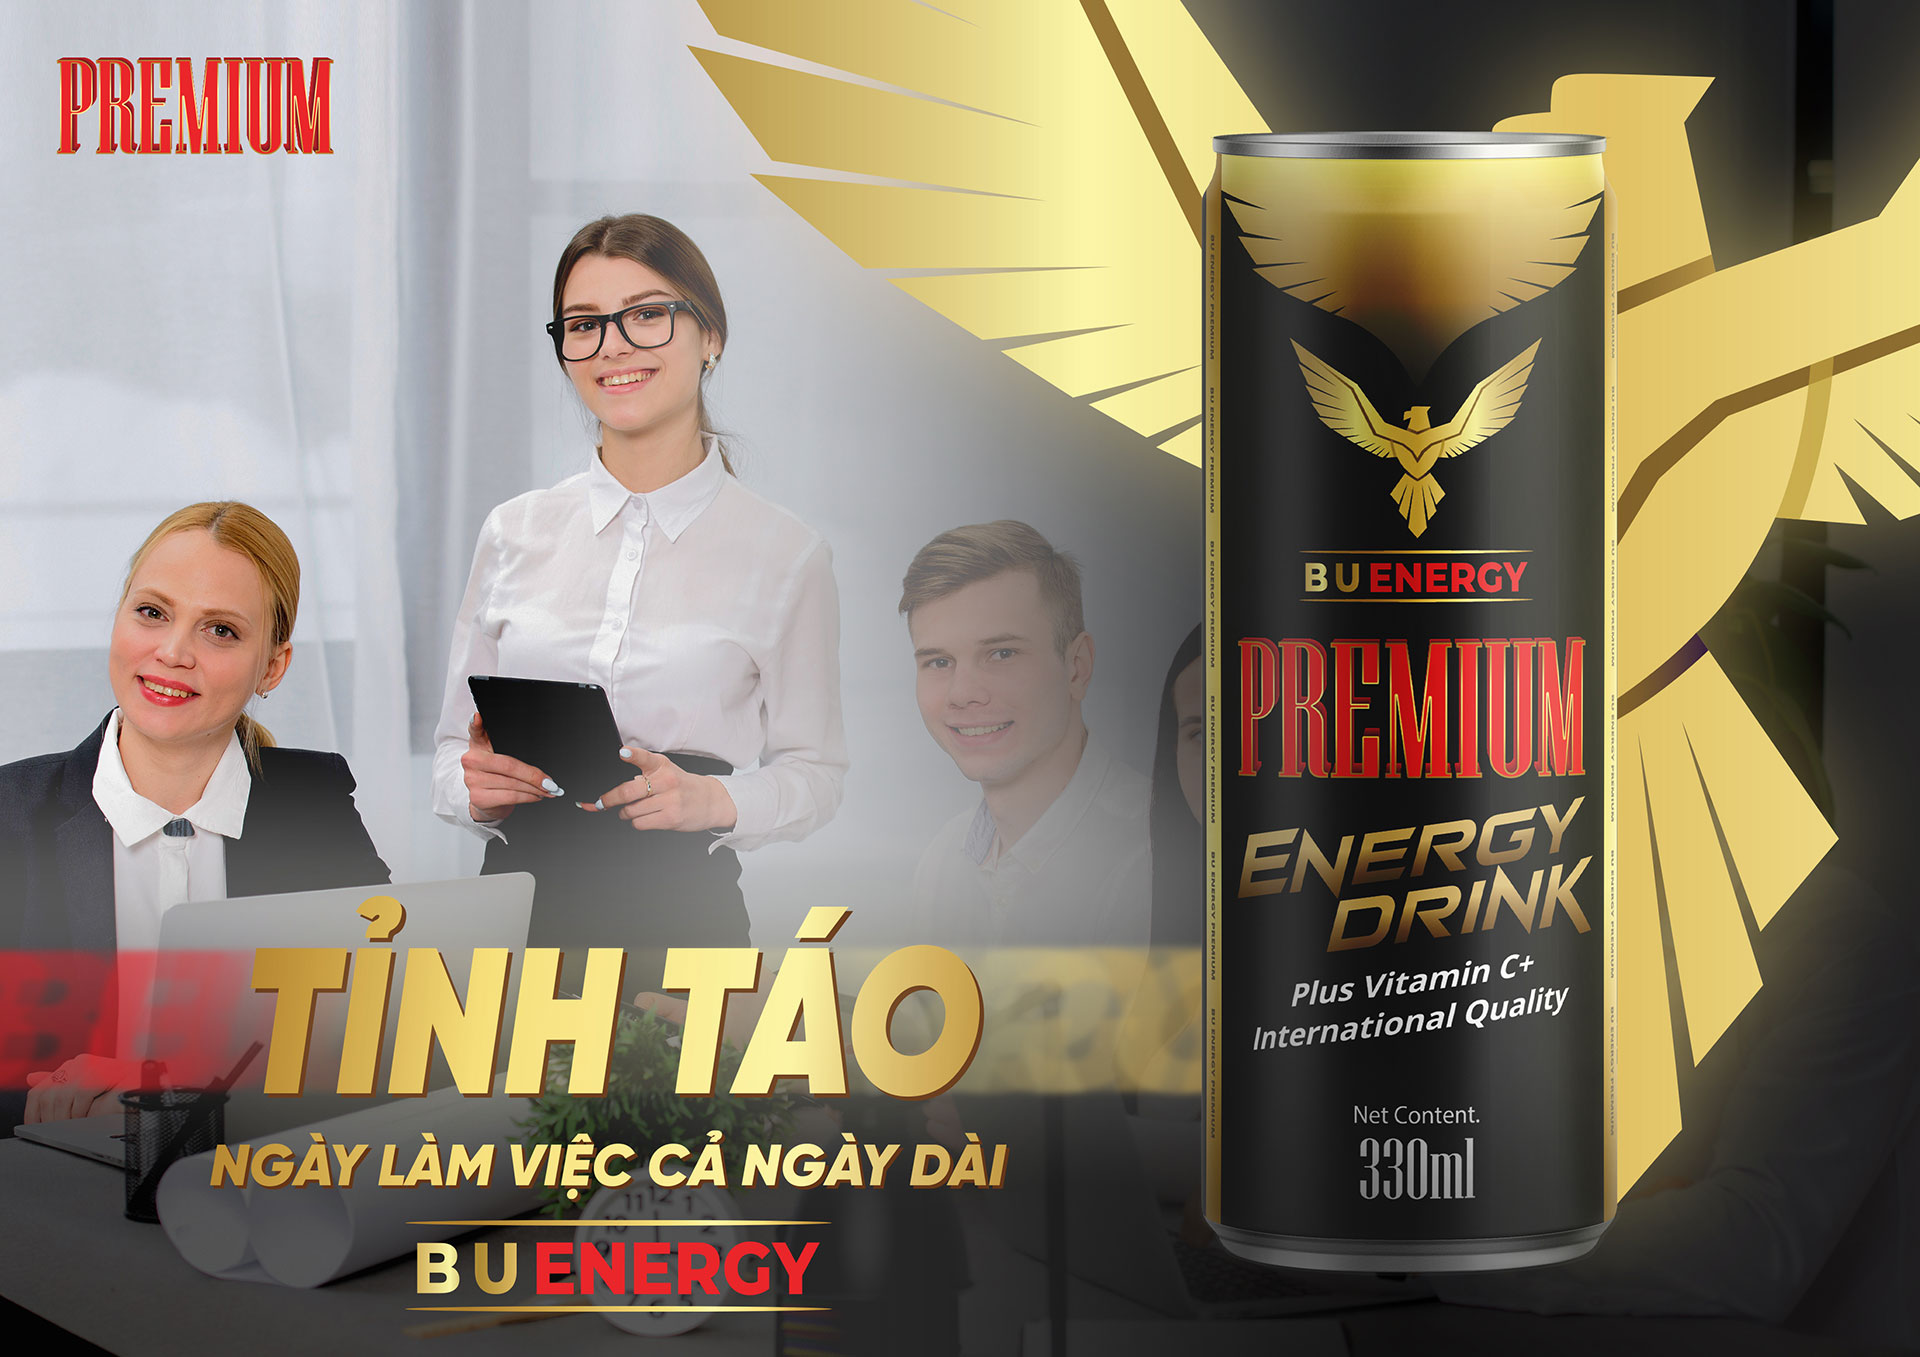 Elevate Your Day with BU Energy Premium 330ml - Energy drink Vietnam